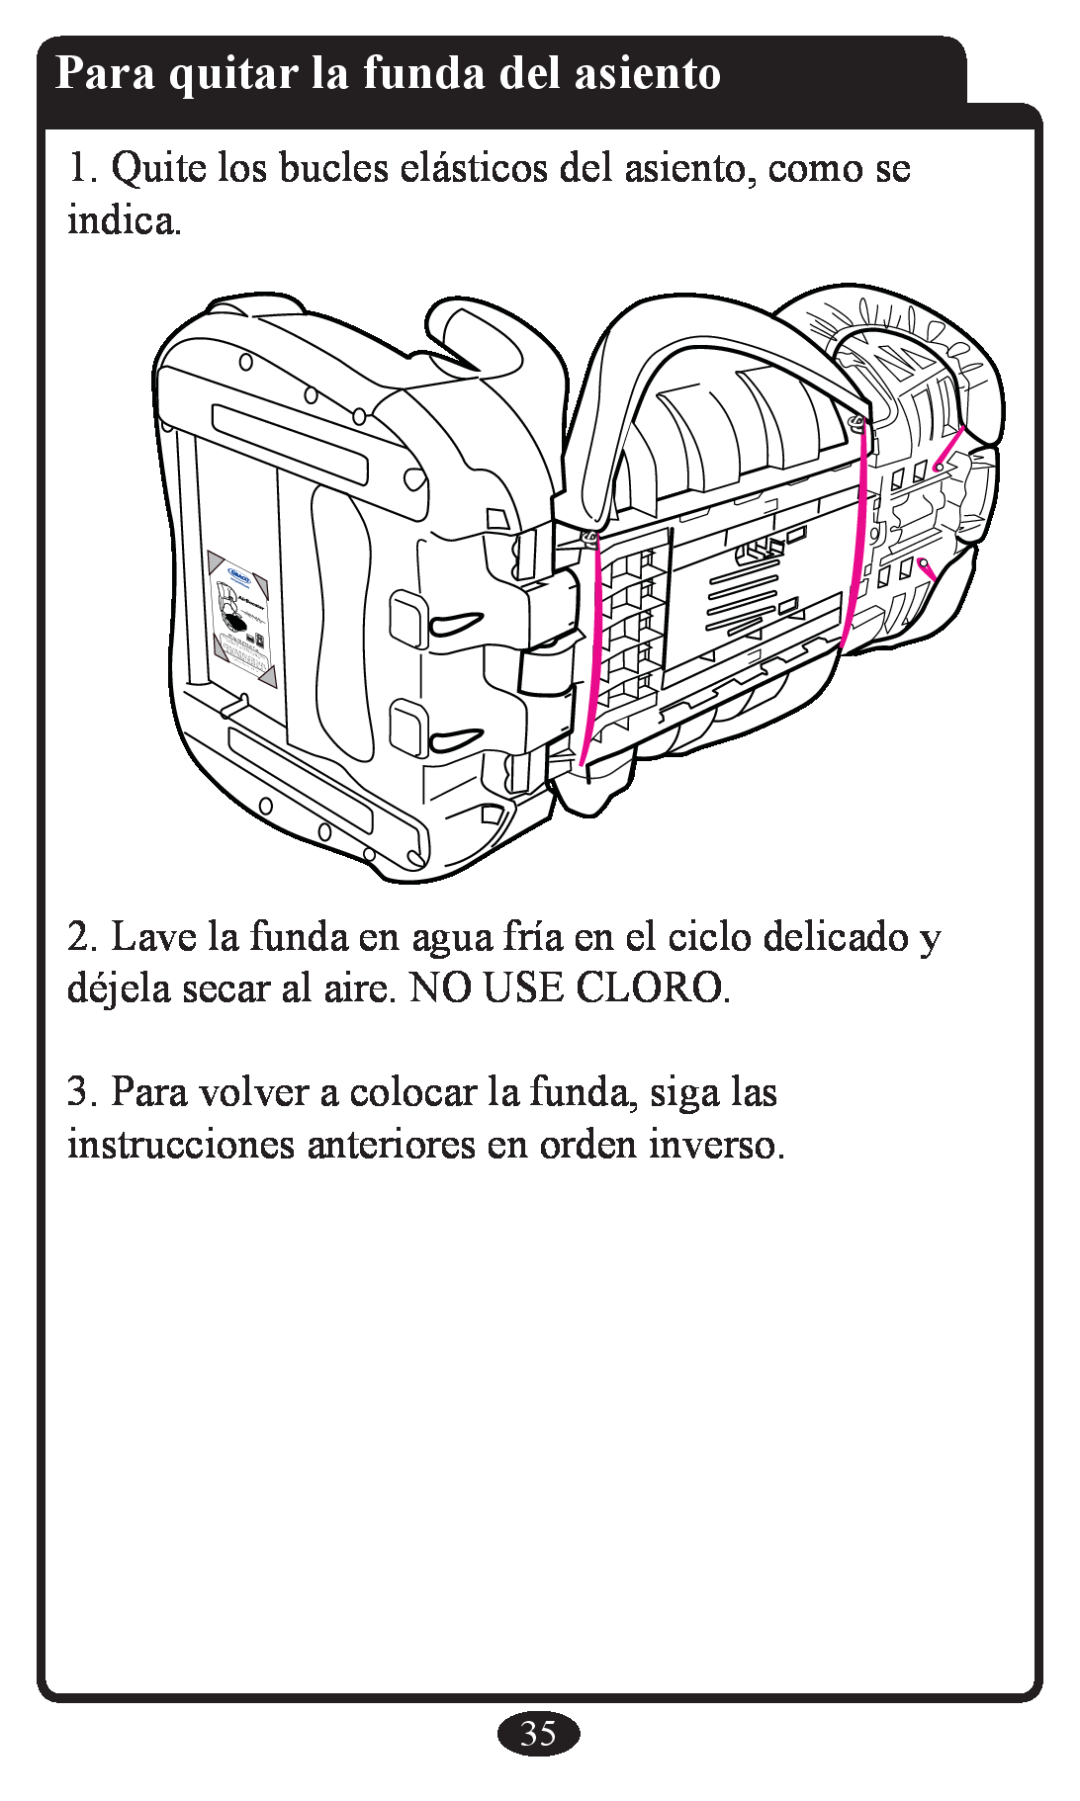 Graco Booster Seat owner manual Para quitar la funda del asiento, OwBoneosr’tserMaSenatual, Read, This, Manual 